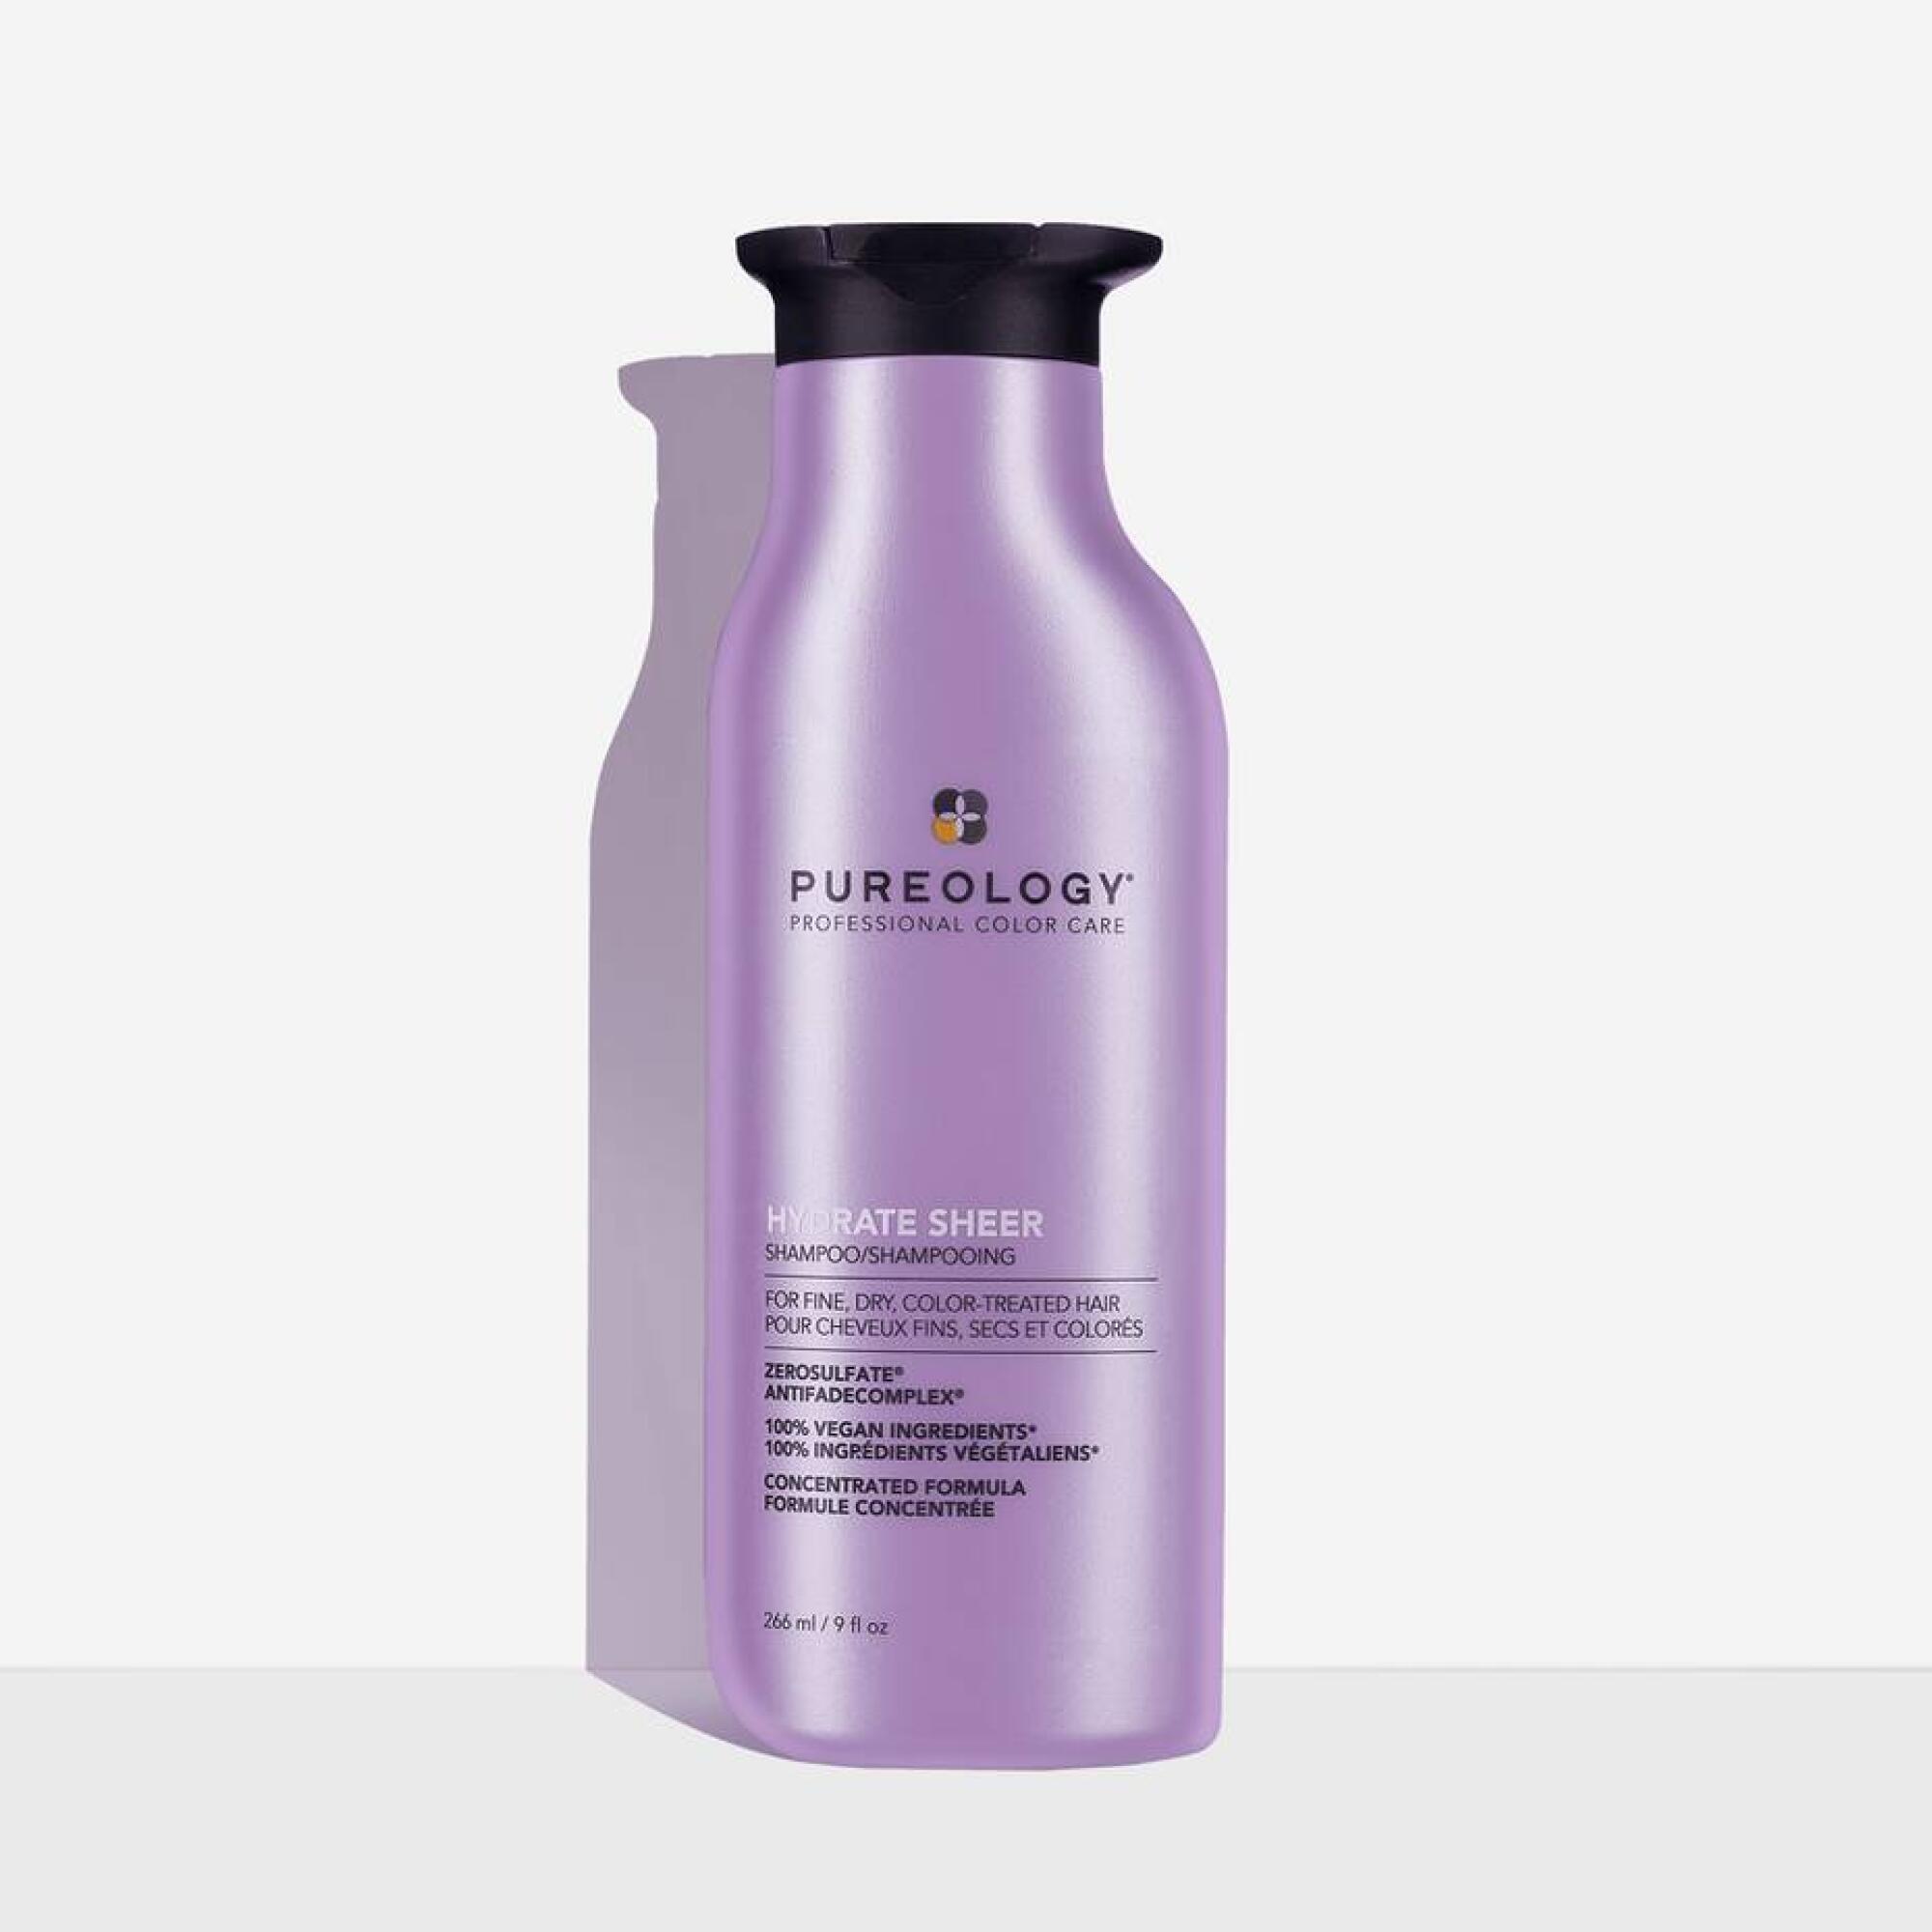 A purple Pureology Hydrate Sheer shampoo bottle on a white background